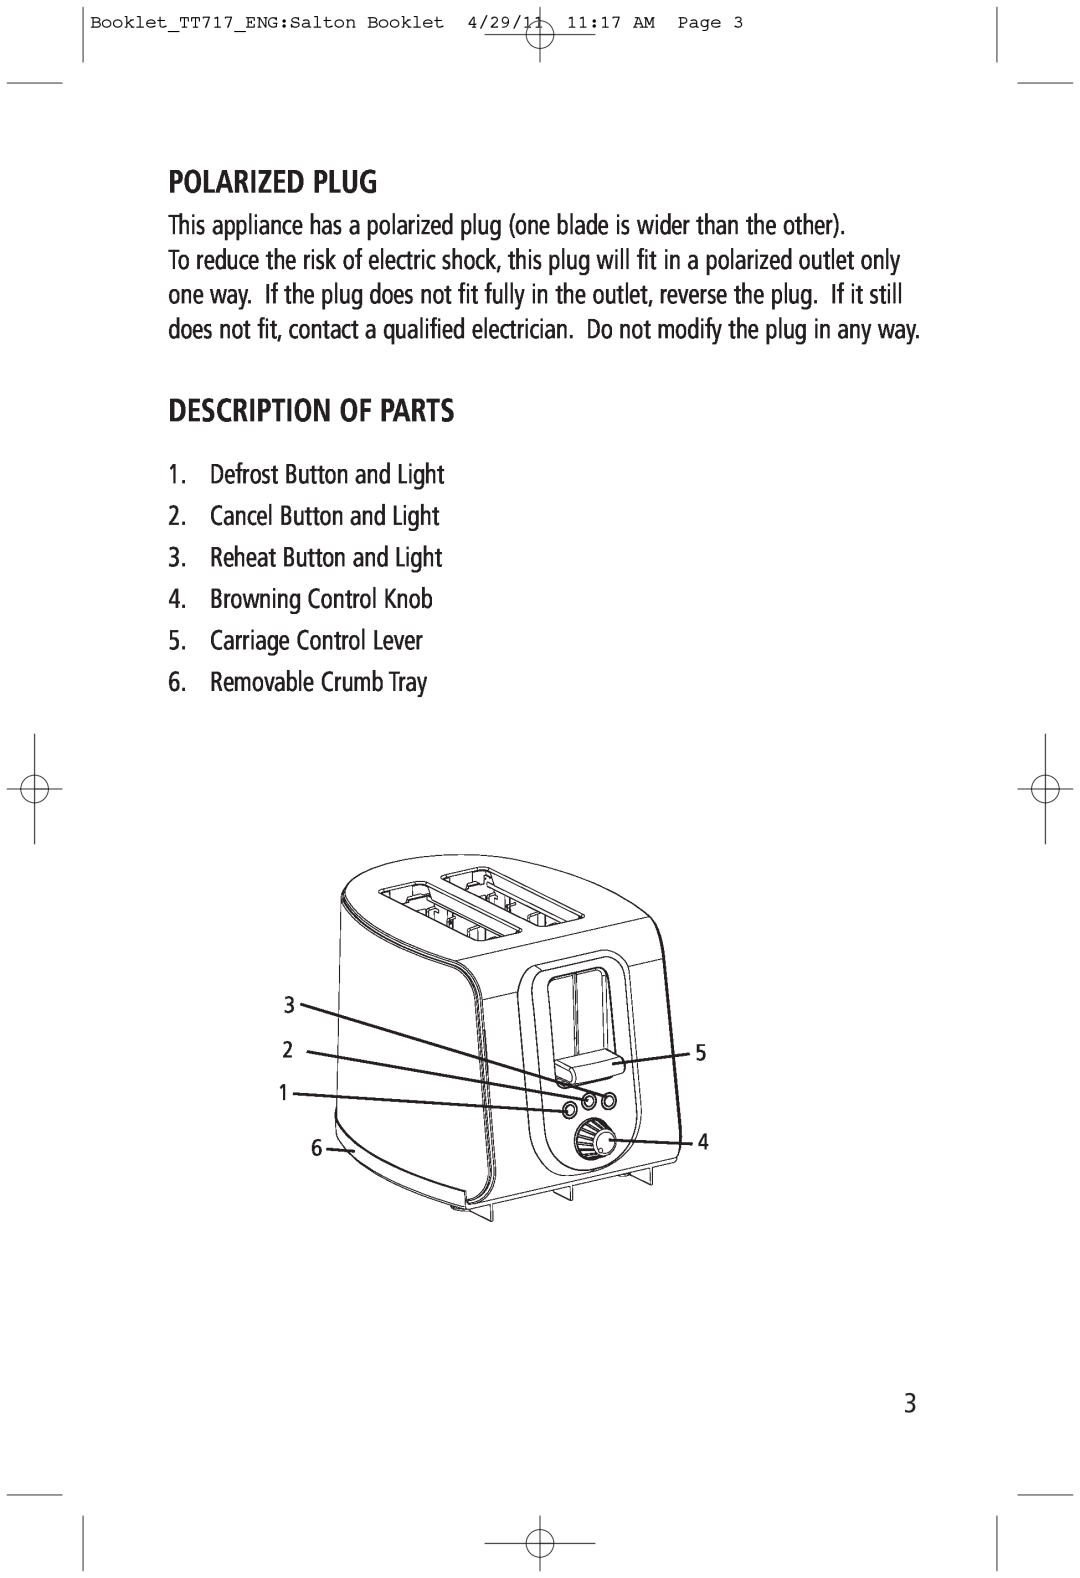 Toastess TT717 manual Polarized Plug, Description Of Parts 